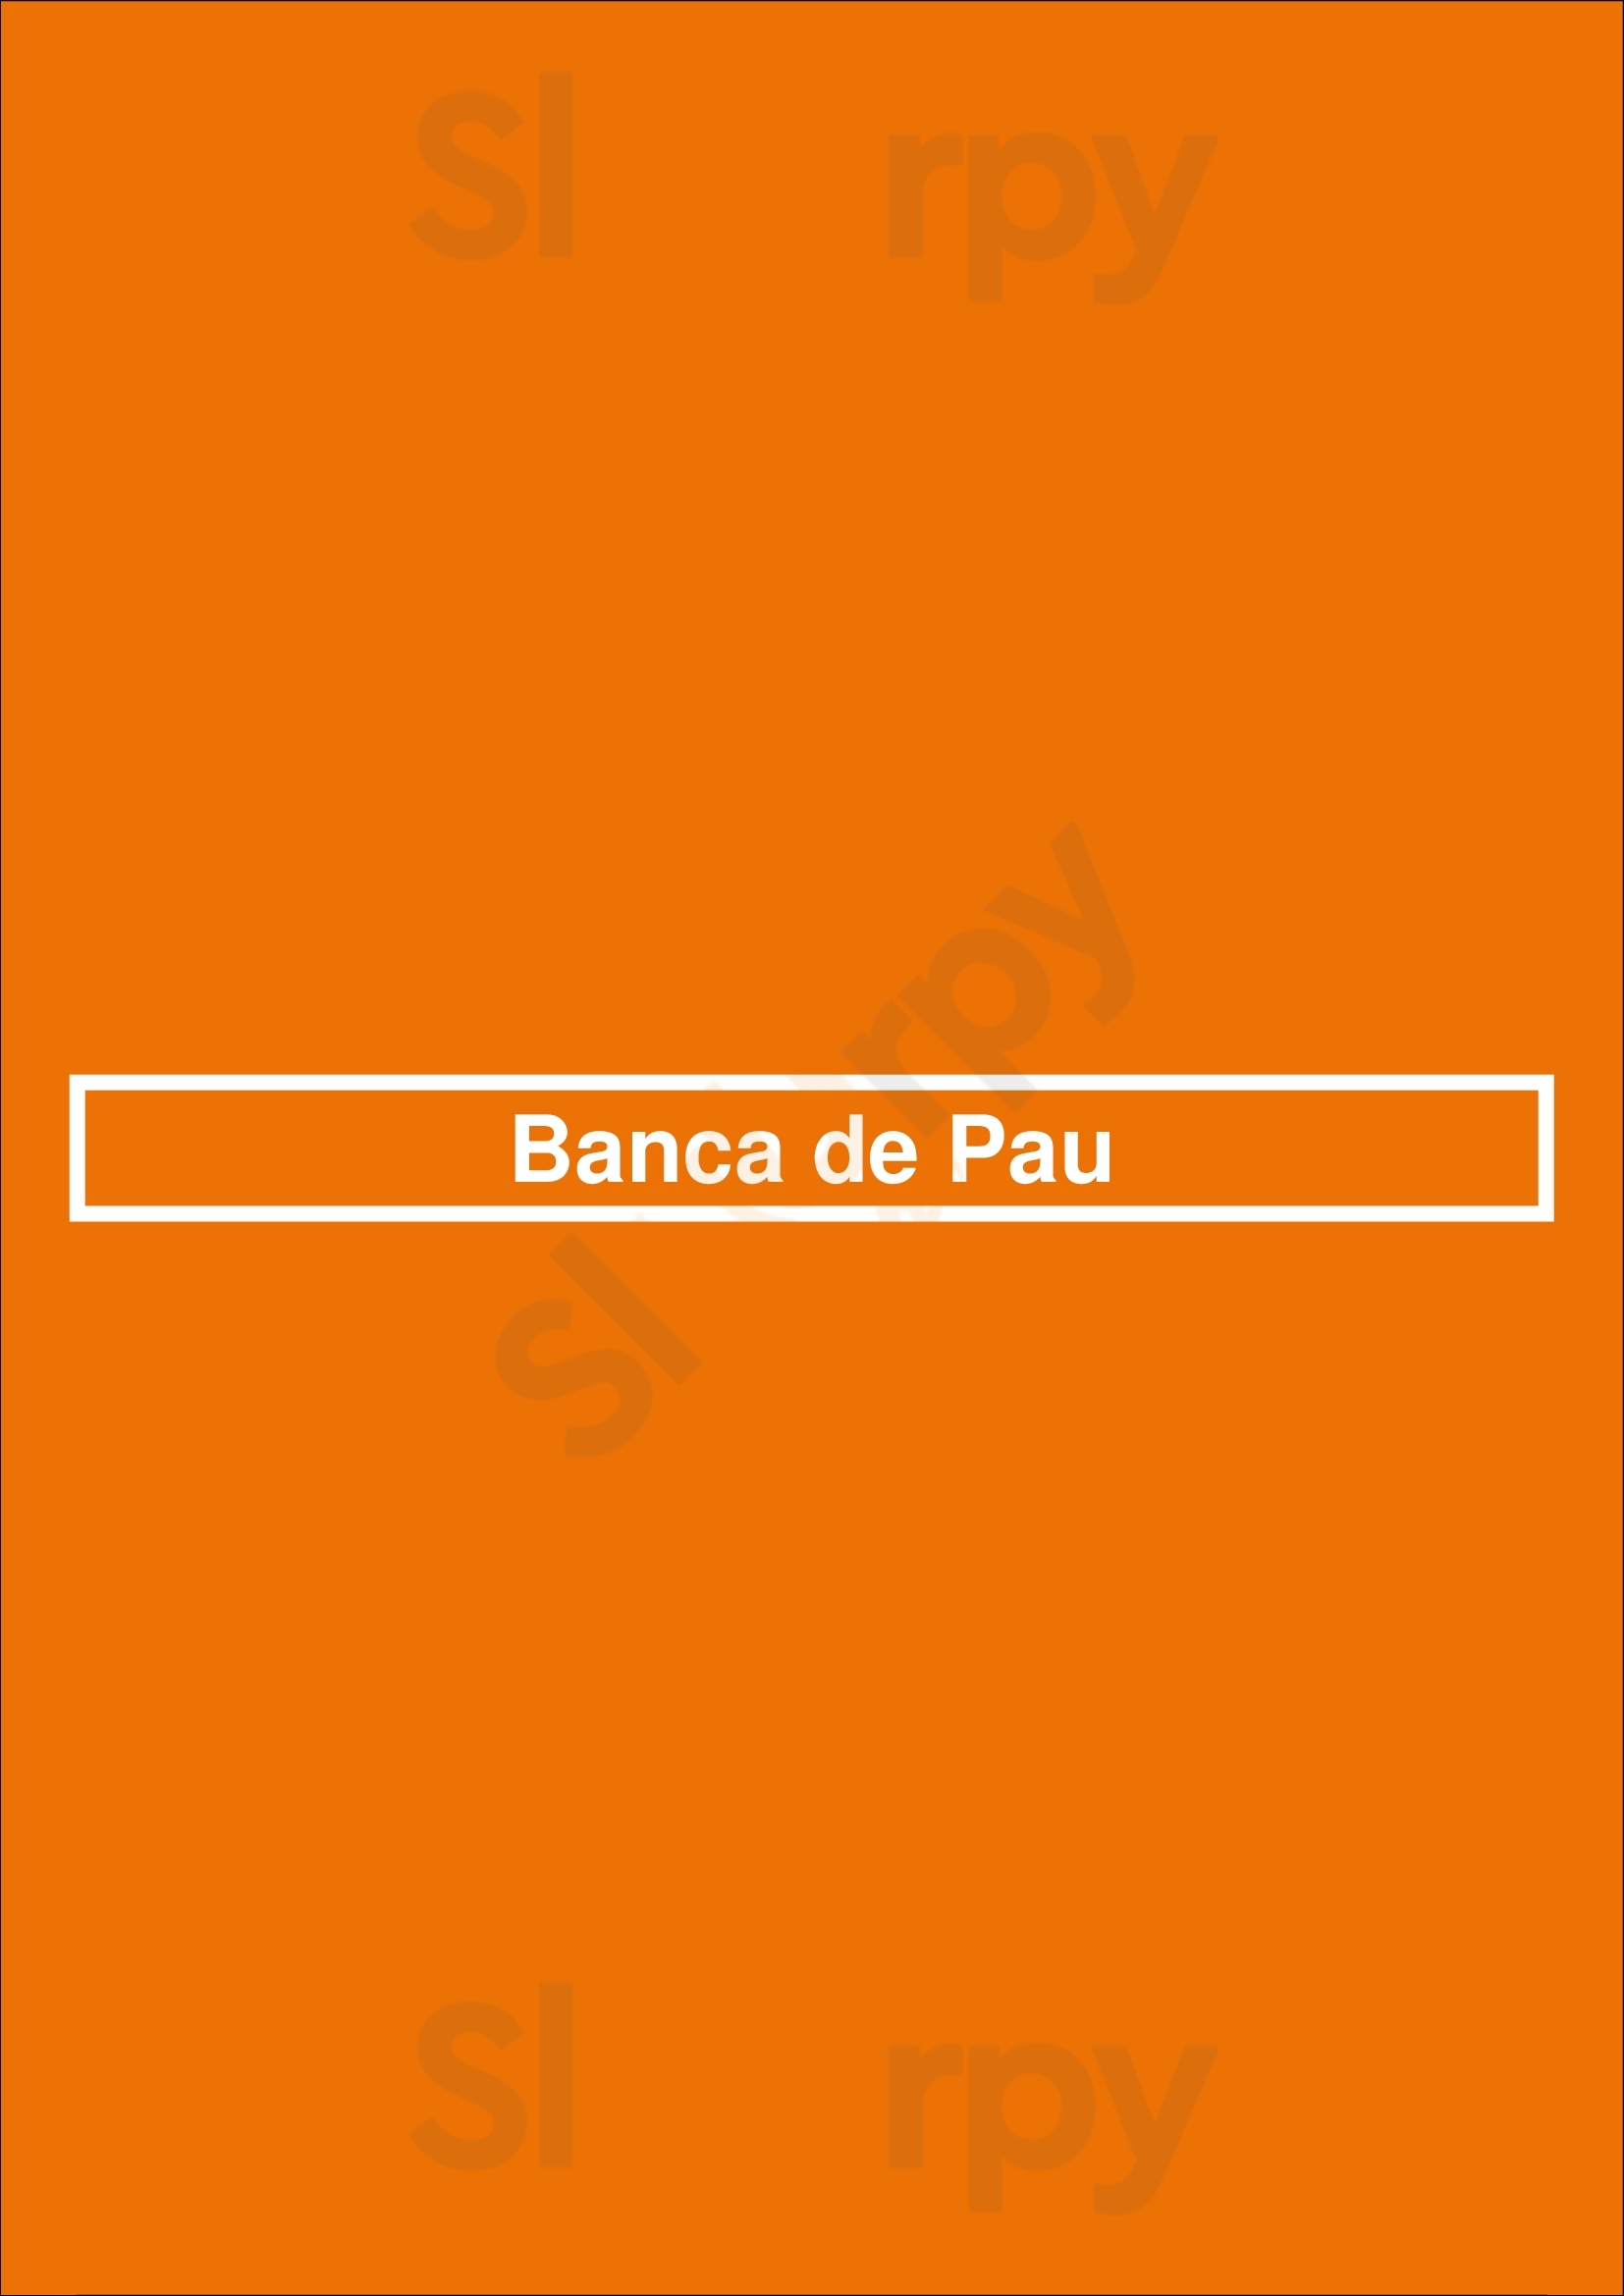 Banca De Pau Lisboa Menu - 1